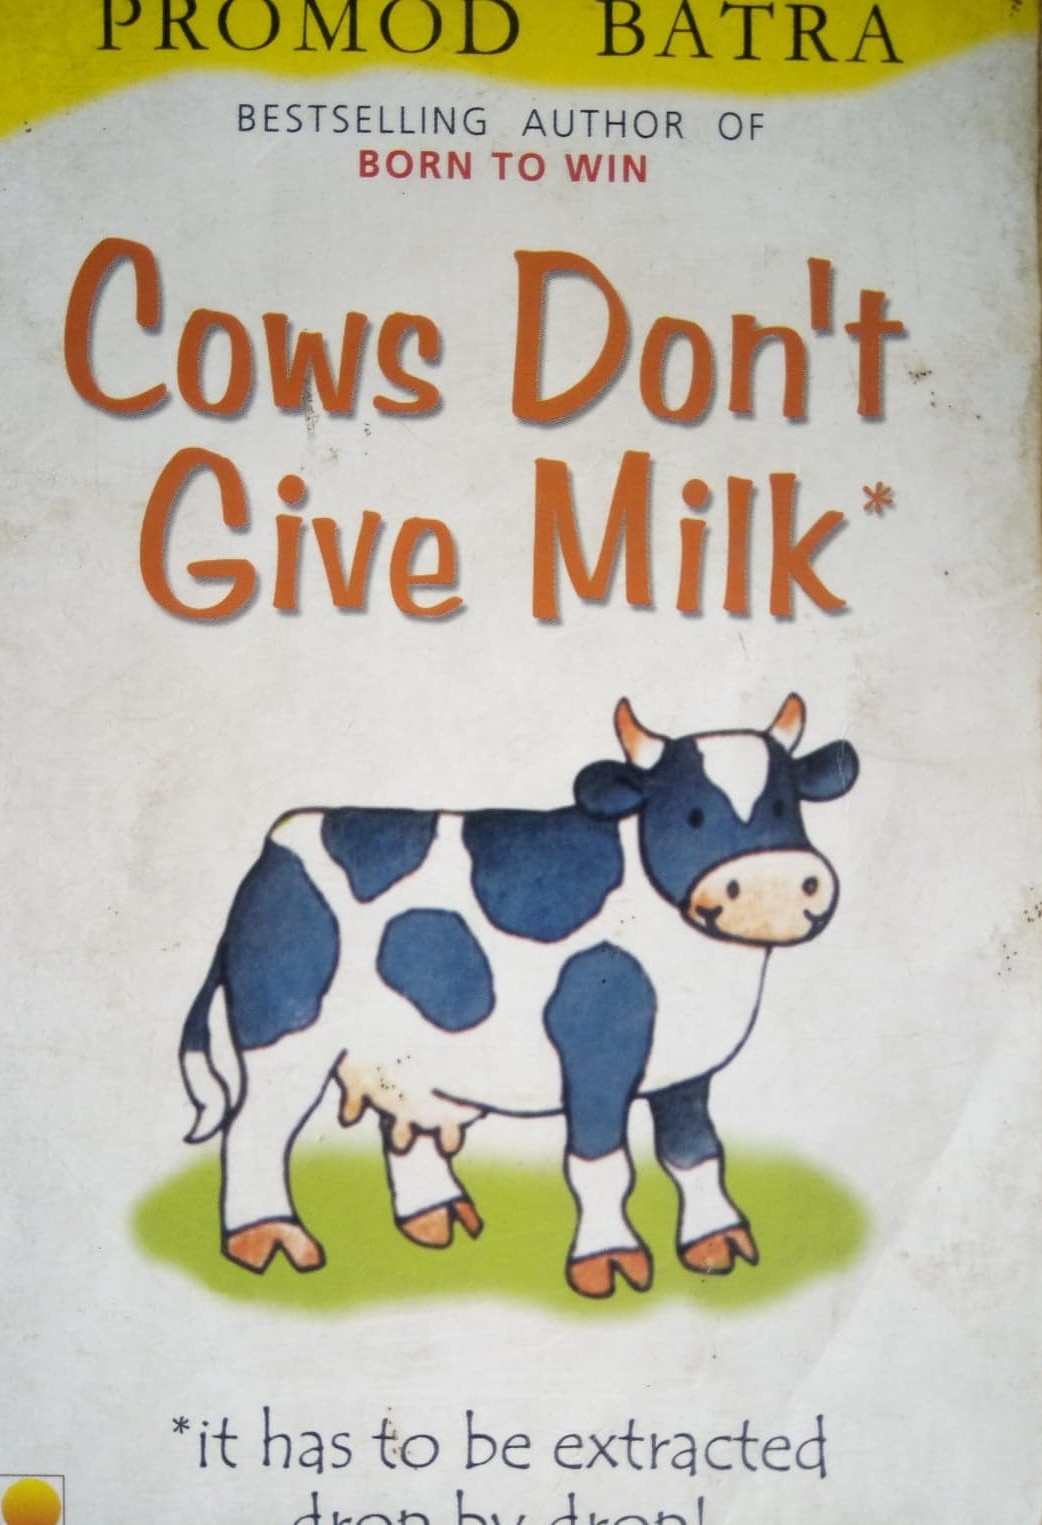 cows giving milk